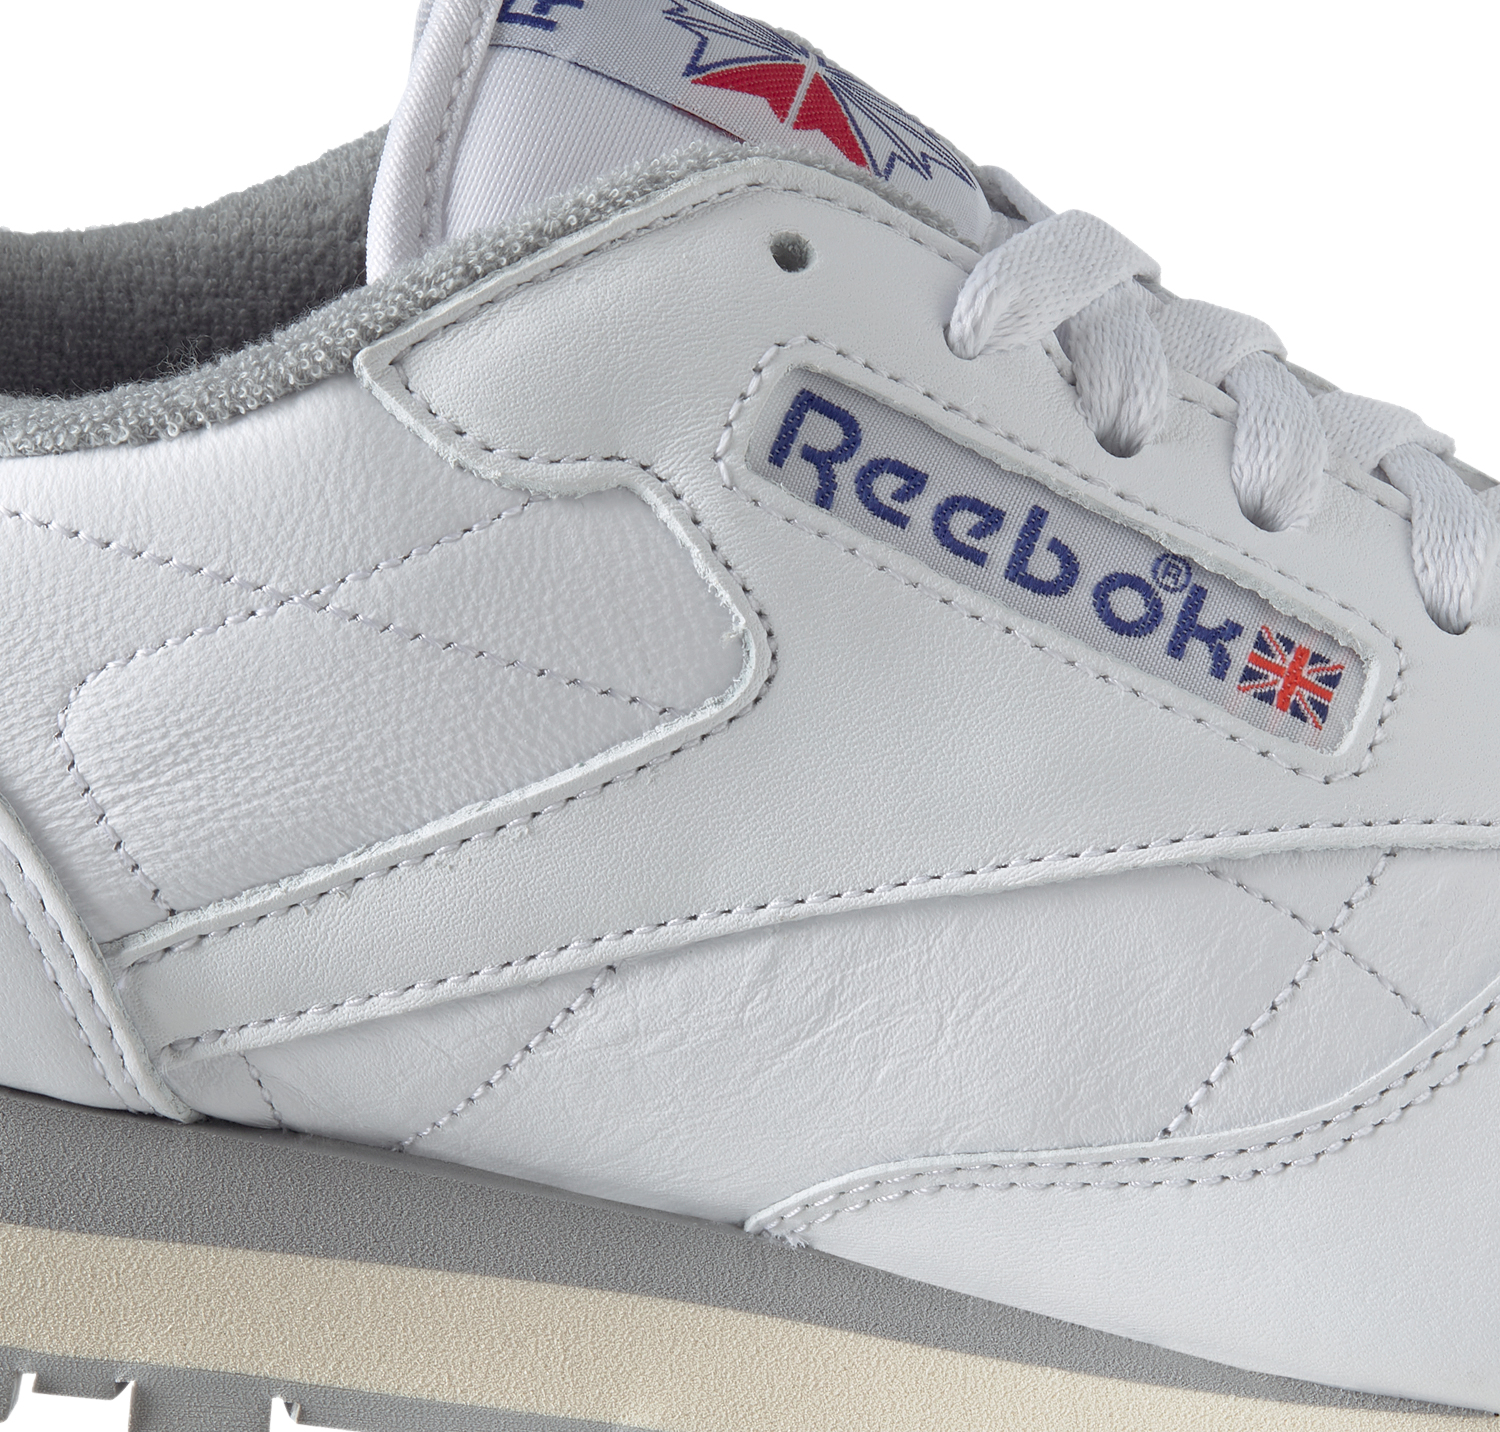 Reebok Classic Leather R12 - Premium Leather - White Grey